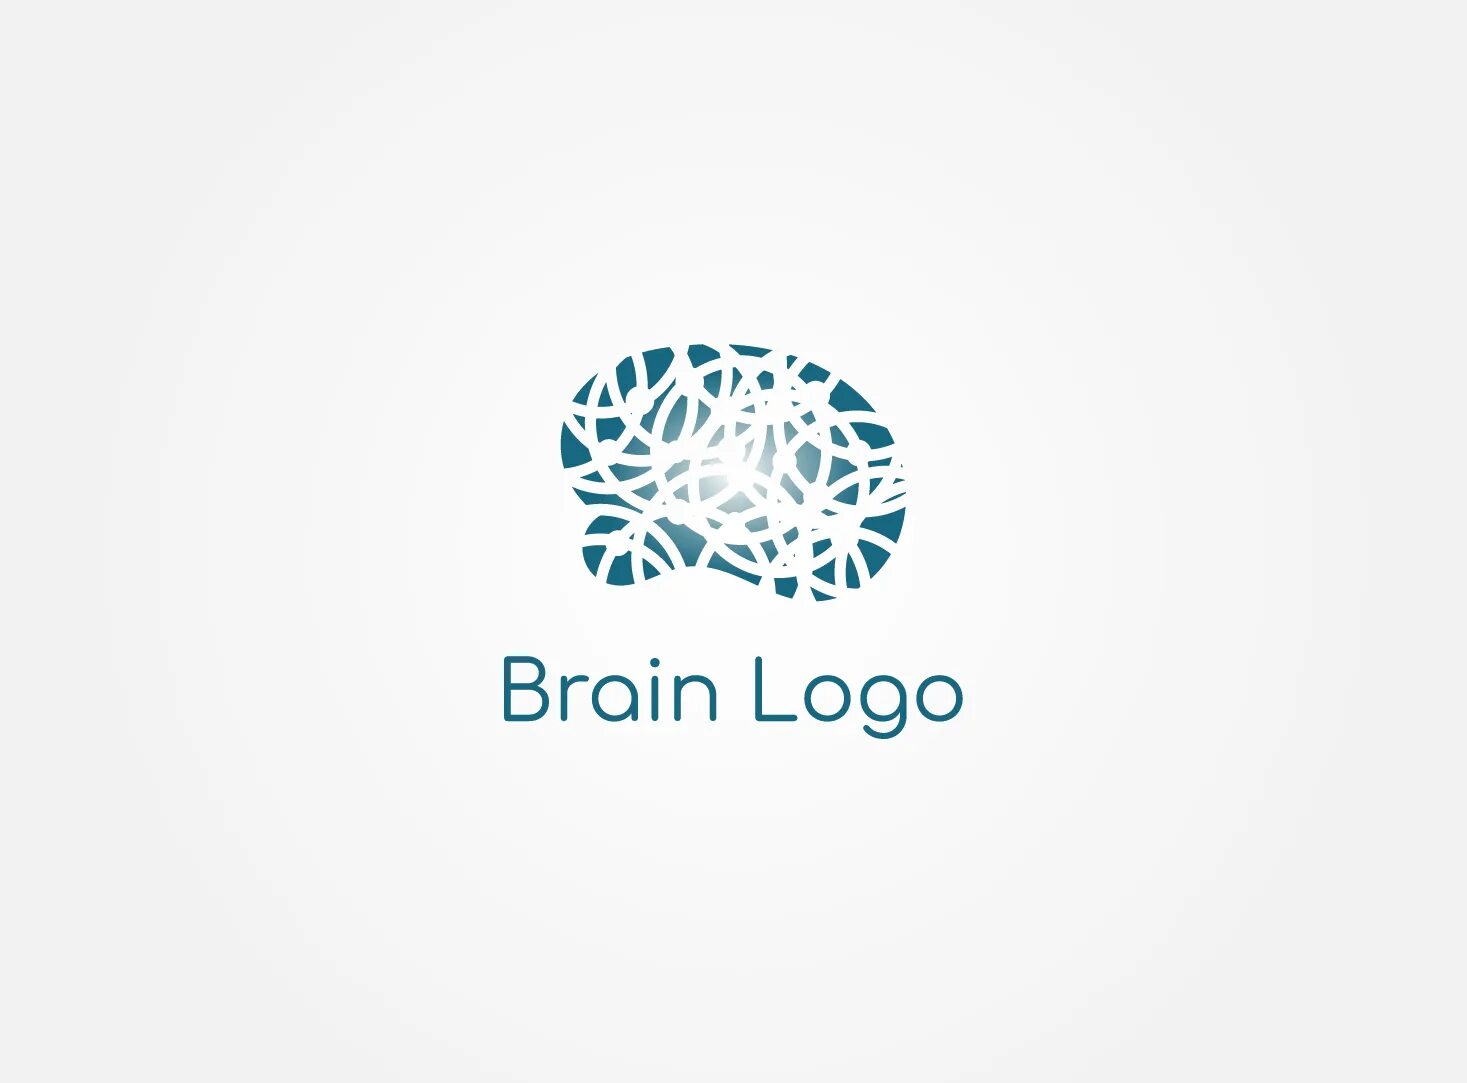 Brain по русски. Эмблема Brain. Логотип мозгов. Логотип с мозгами. Мозг лого Минимализм.